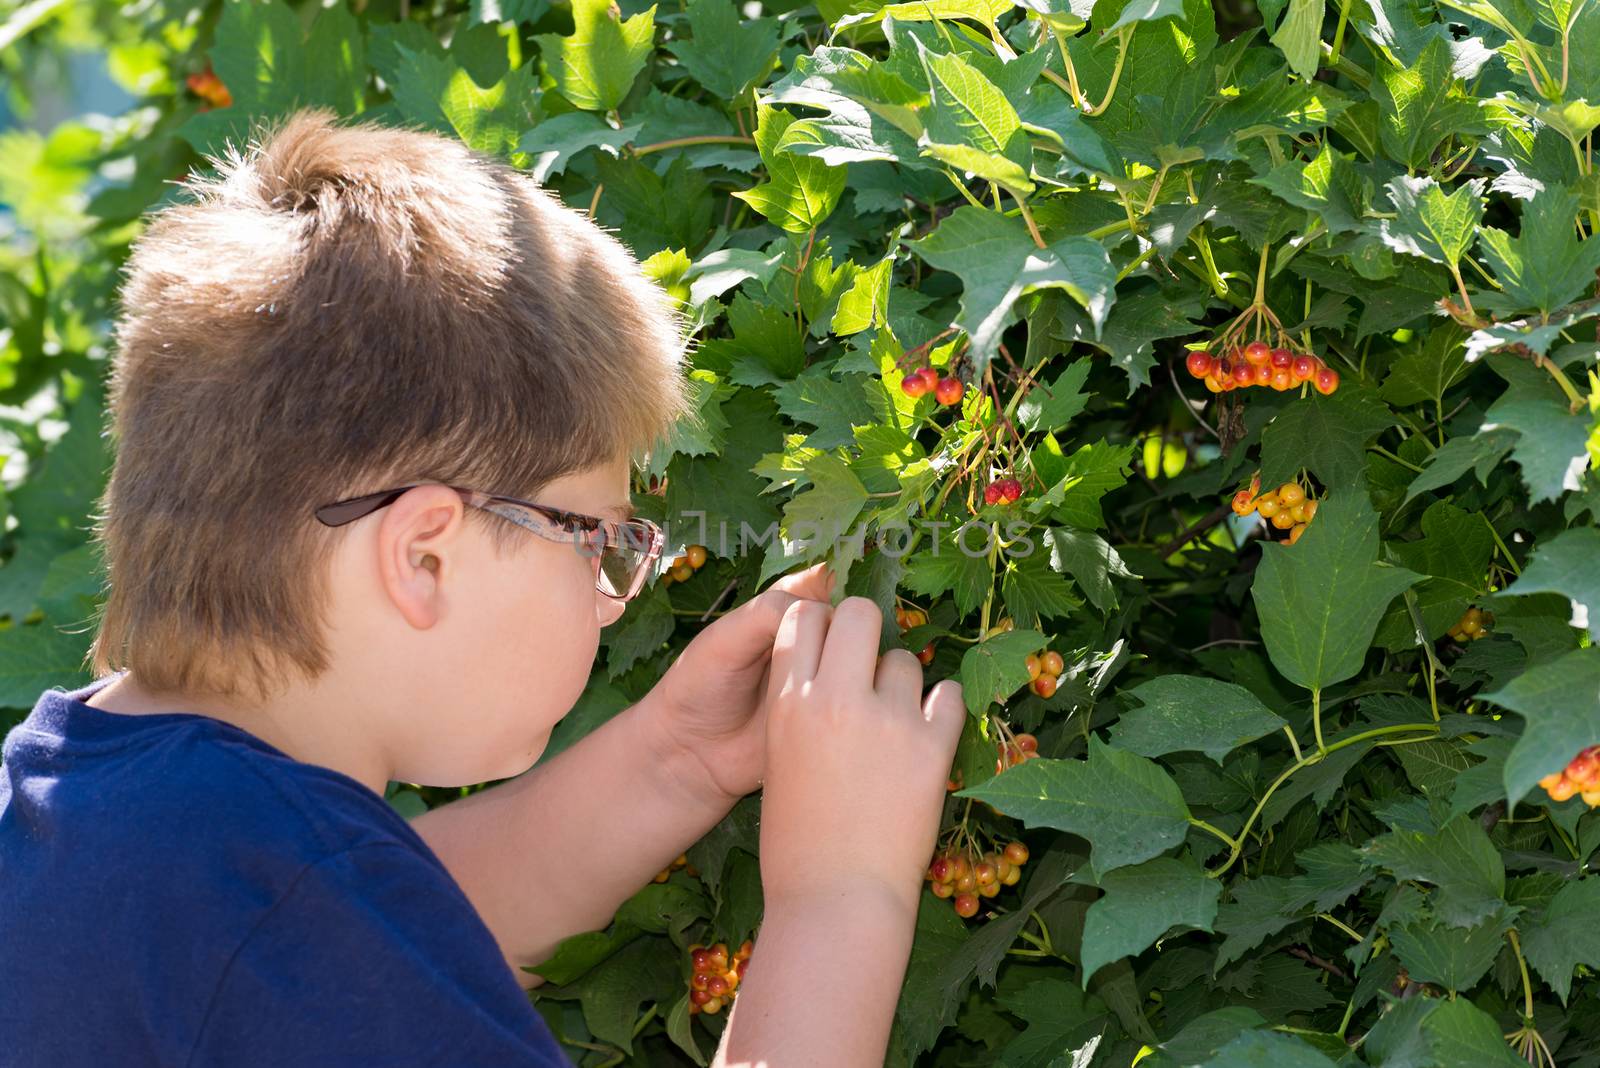 Boy with glasses considering viburnum berries